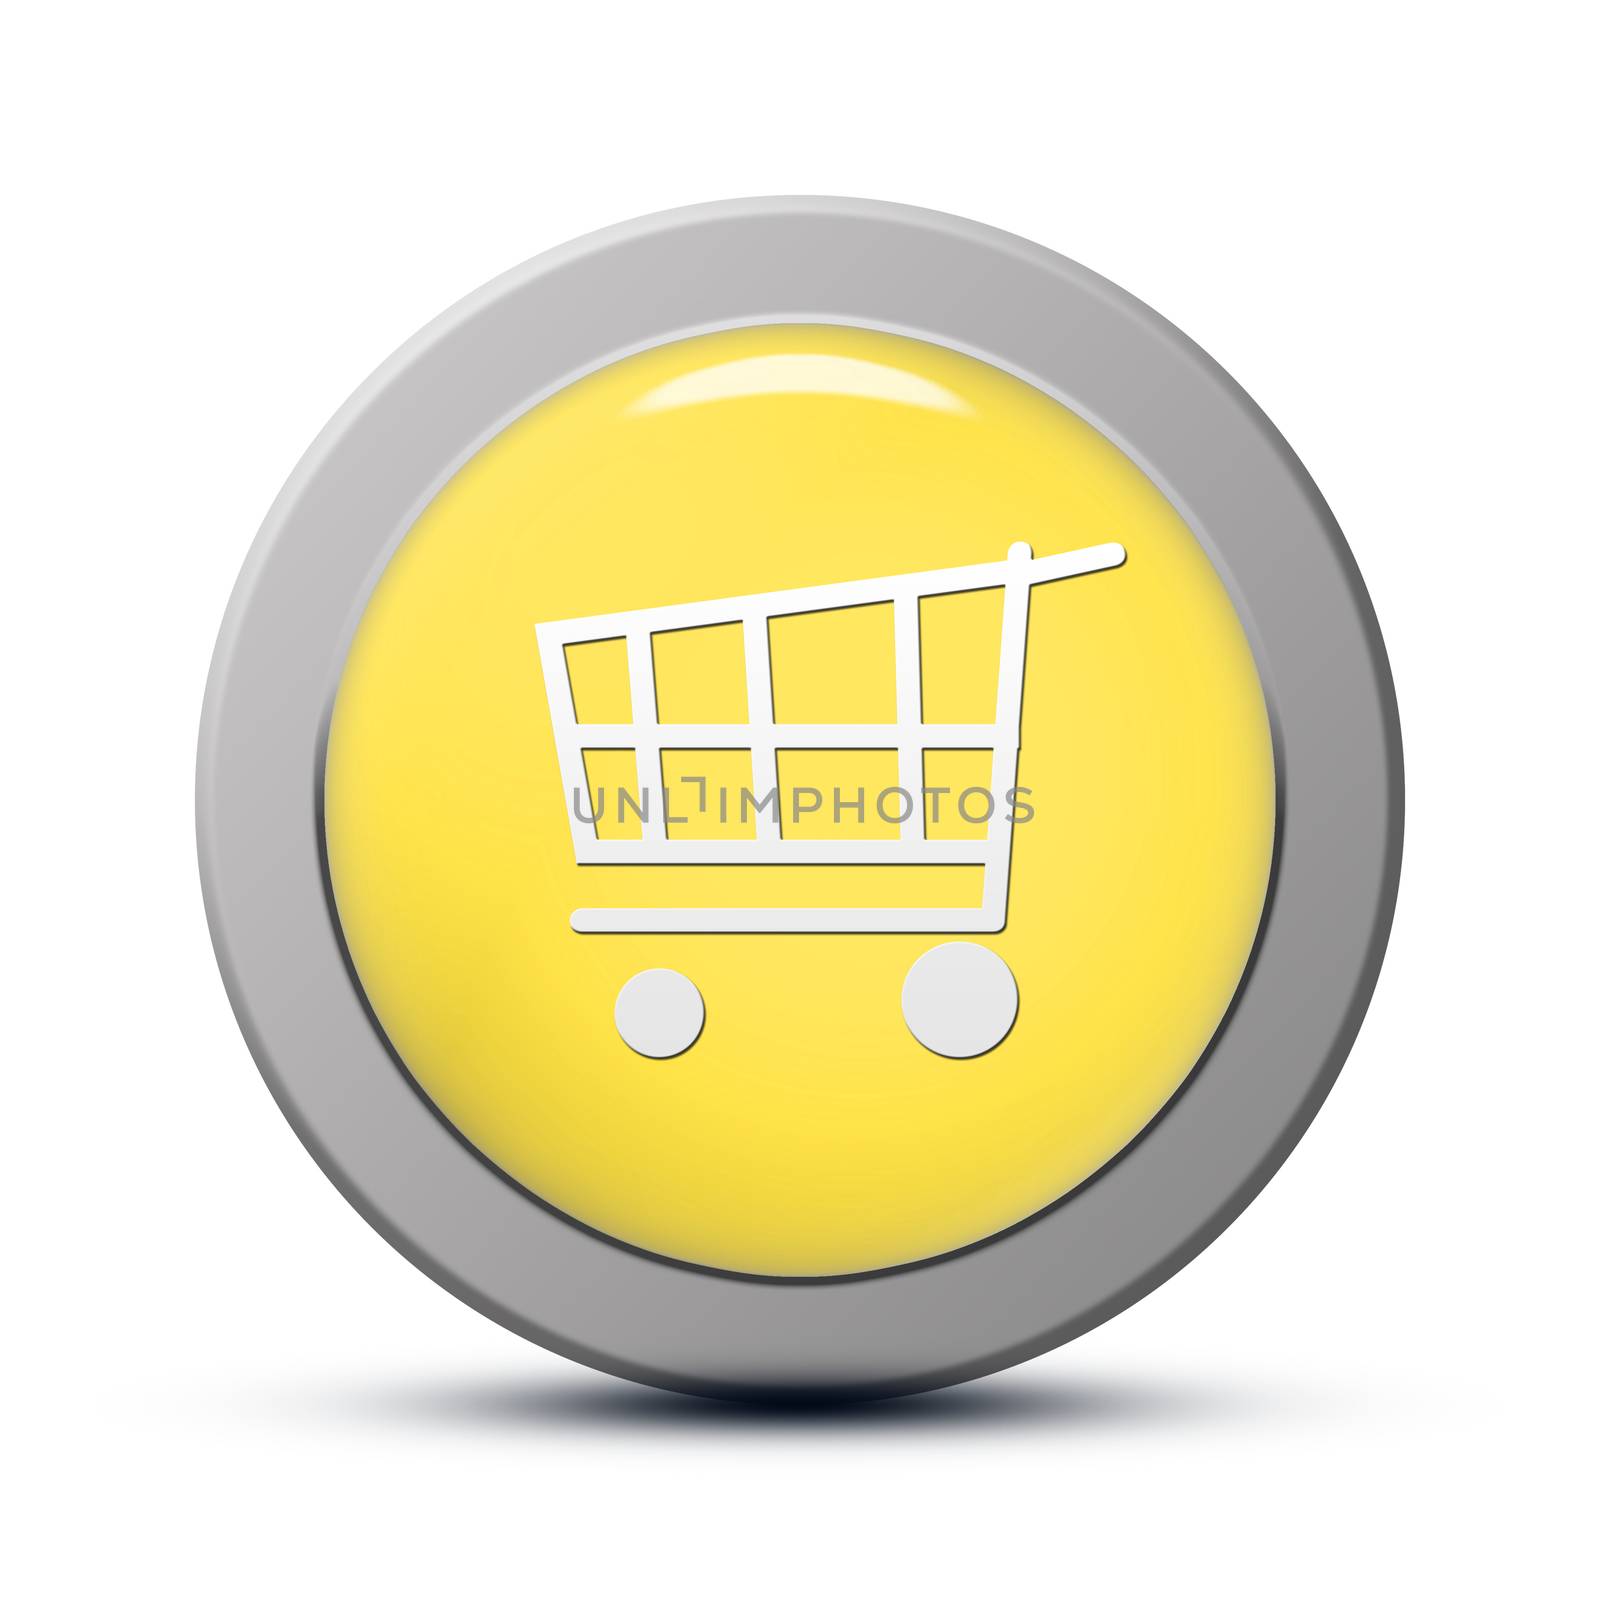 Purchasing cart icon by Mazirama